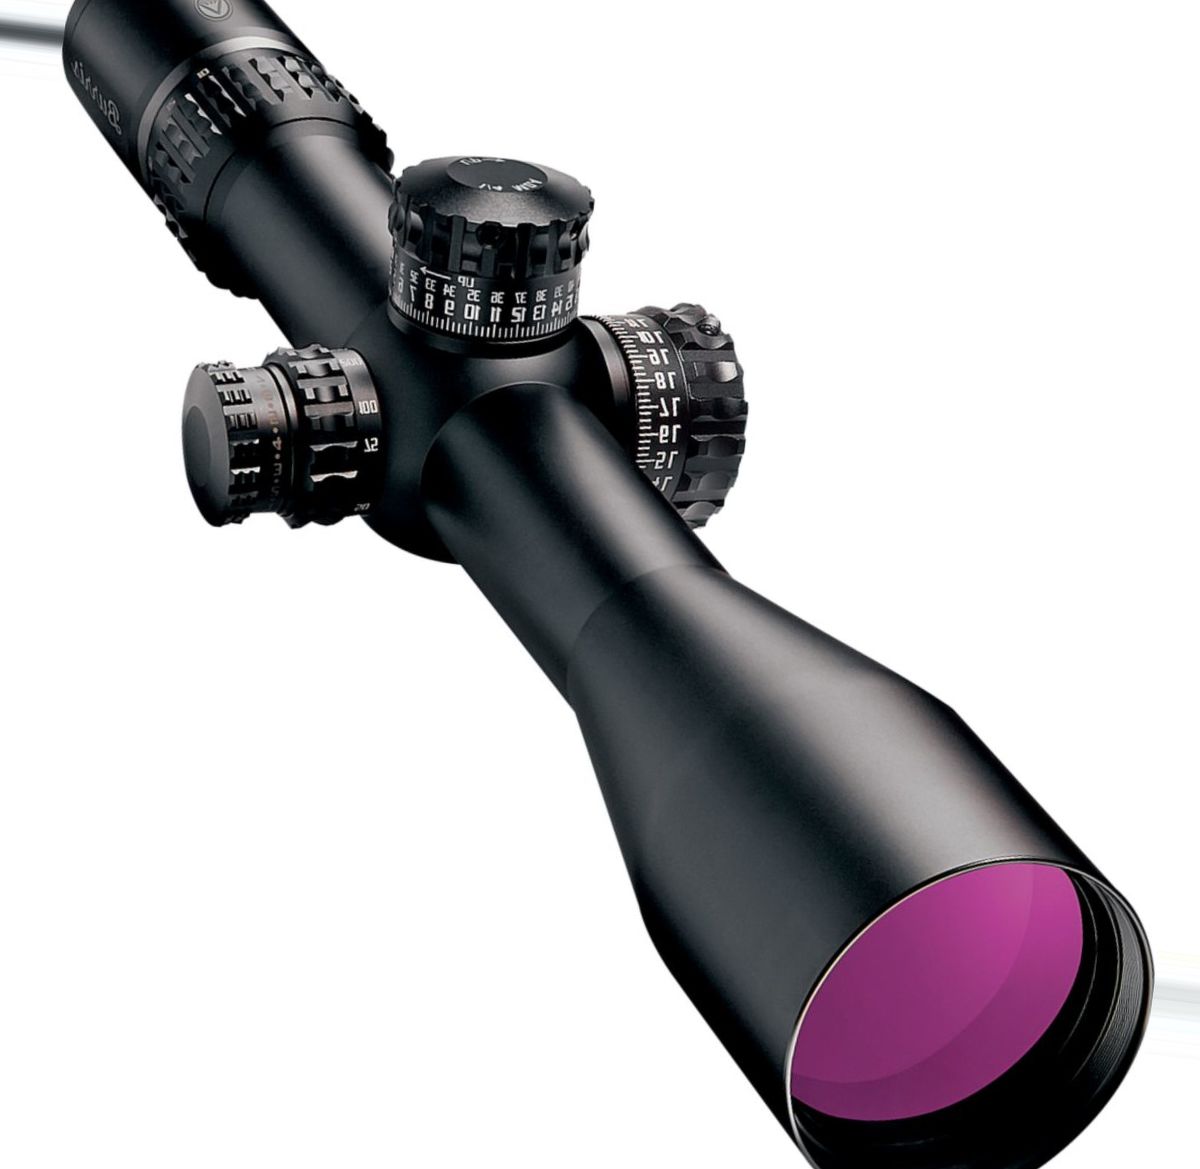 Burris XTR II FFP Riflescope